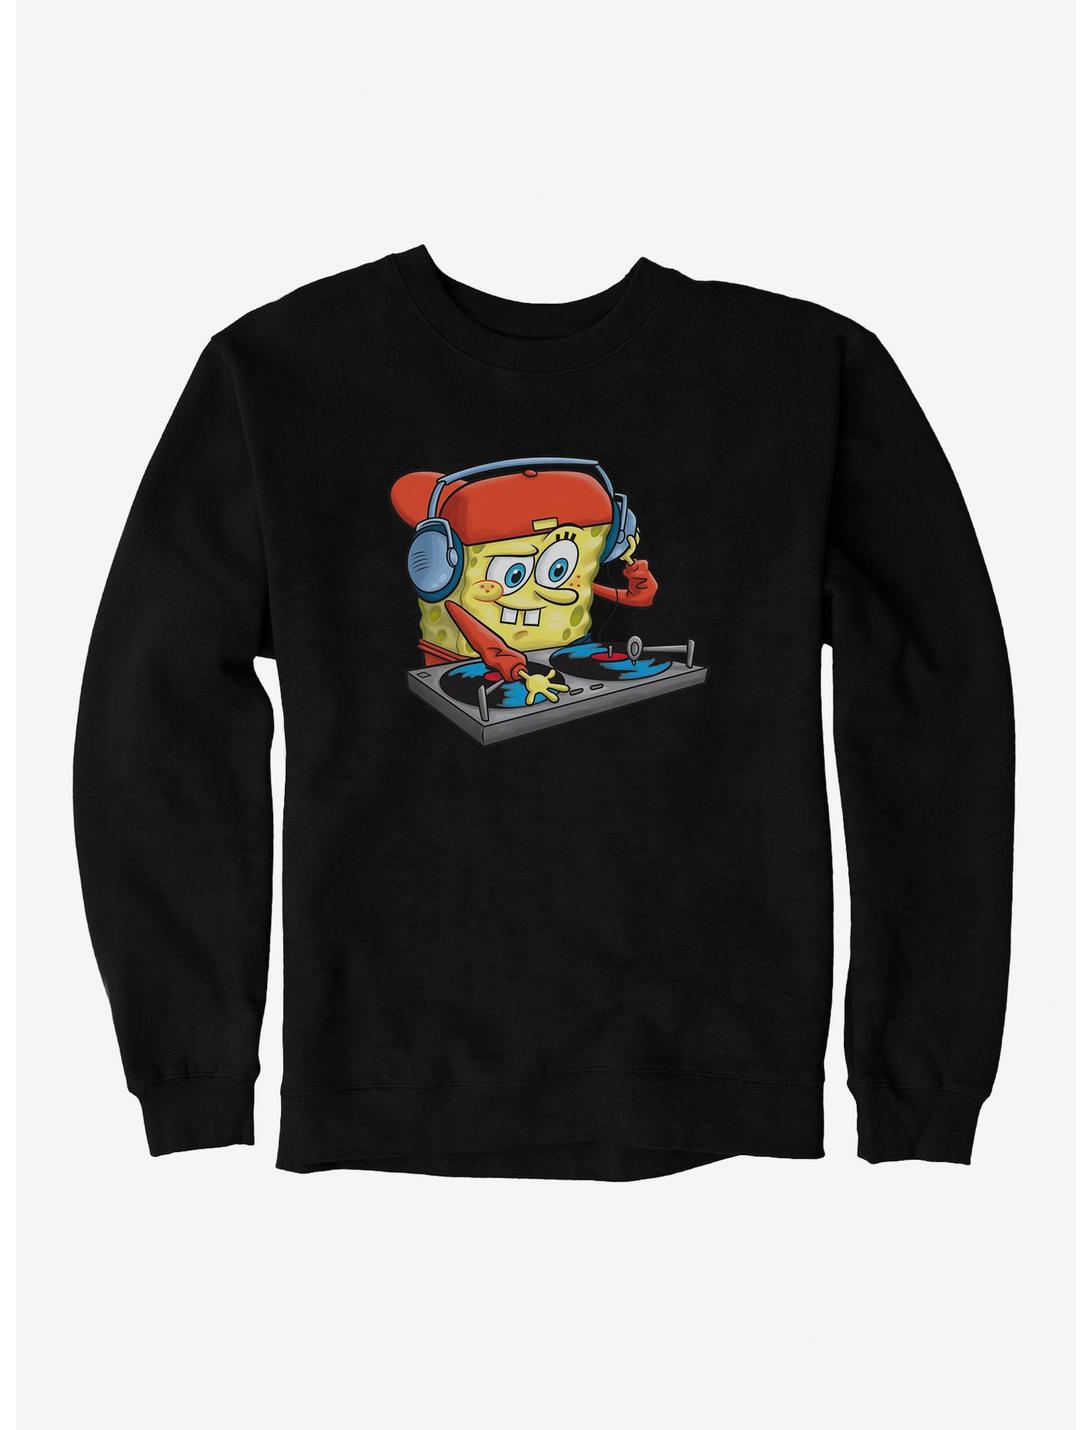 SpongeBob SquarePants DJ Sponge Turntable Sweatshirt, , hi-res